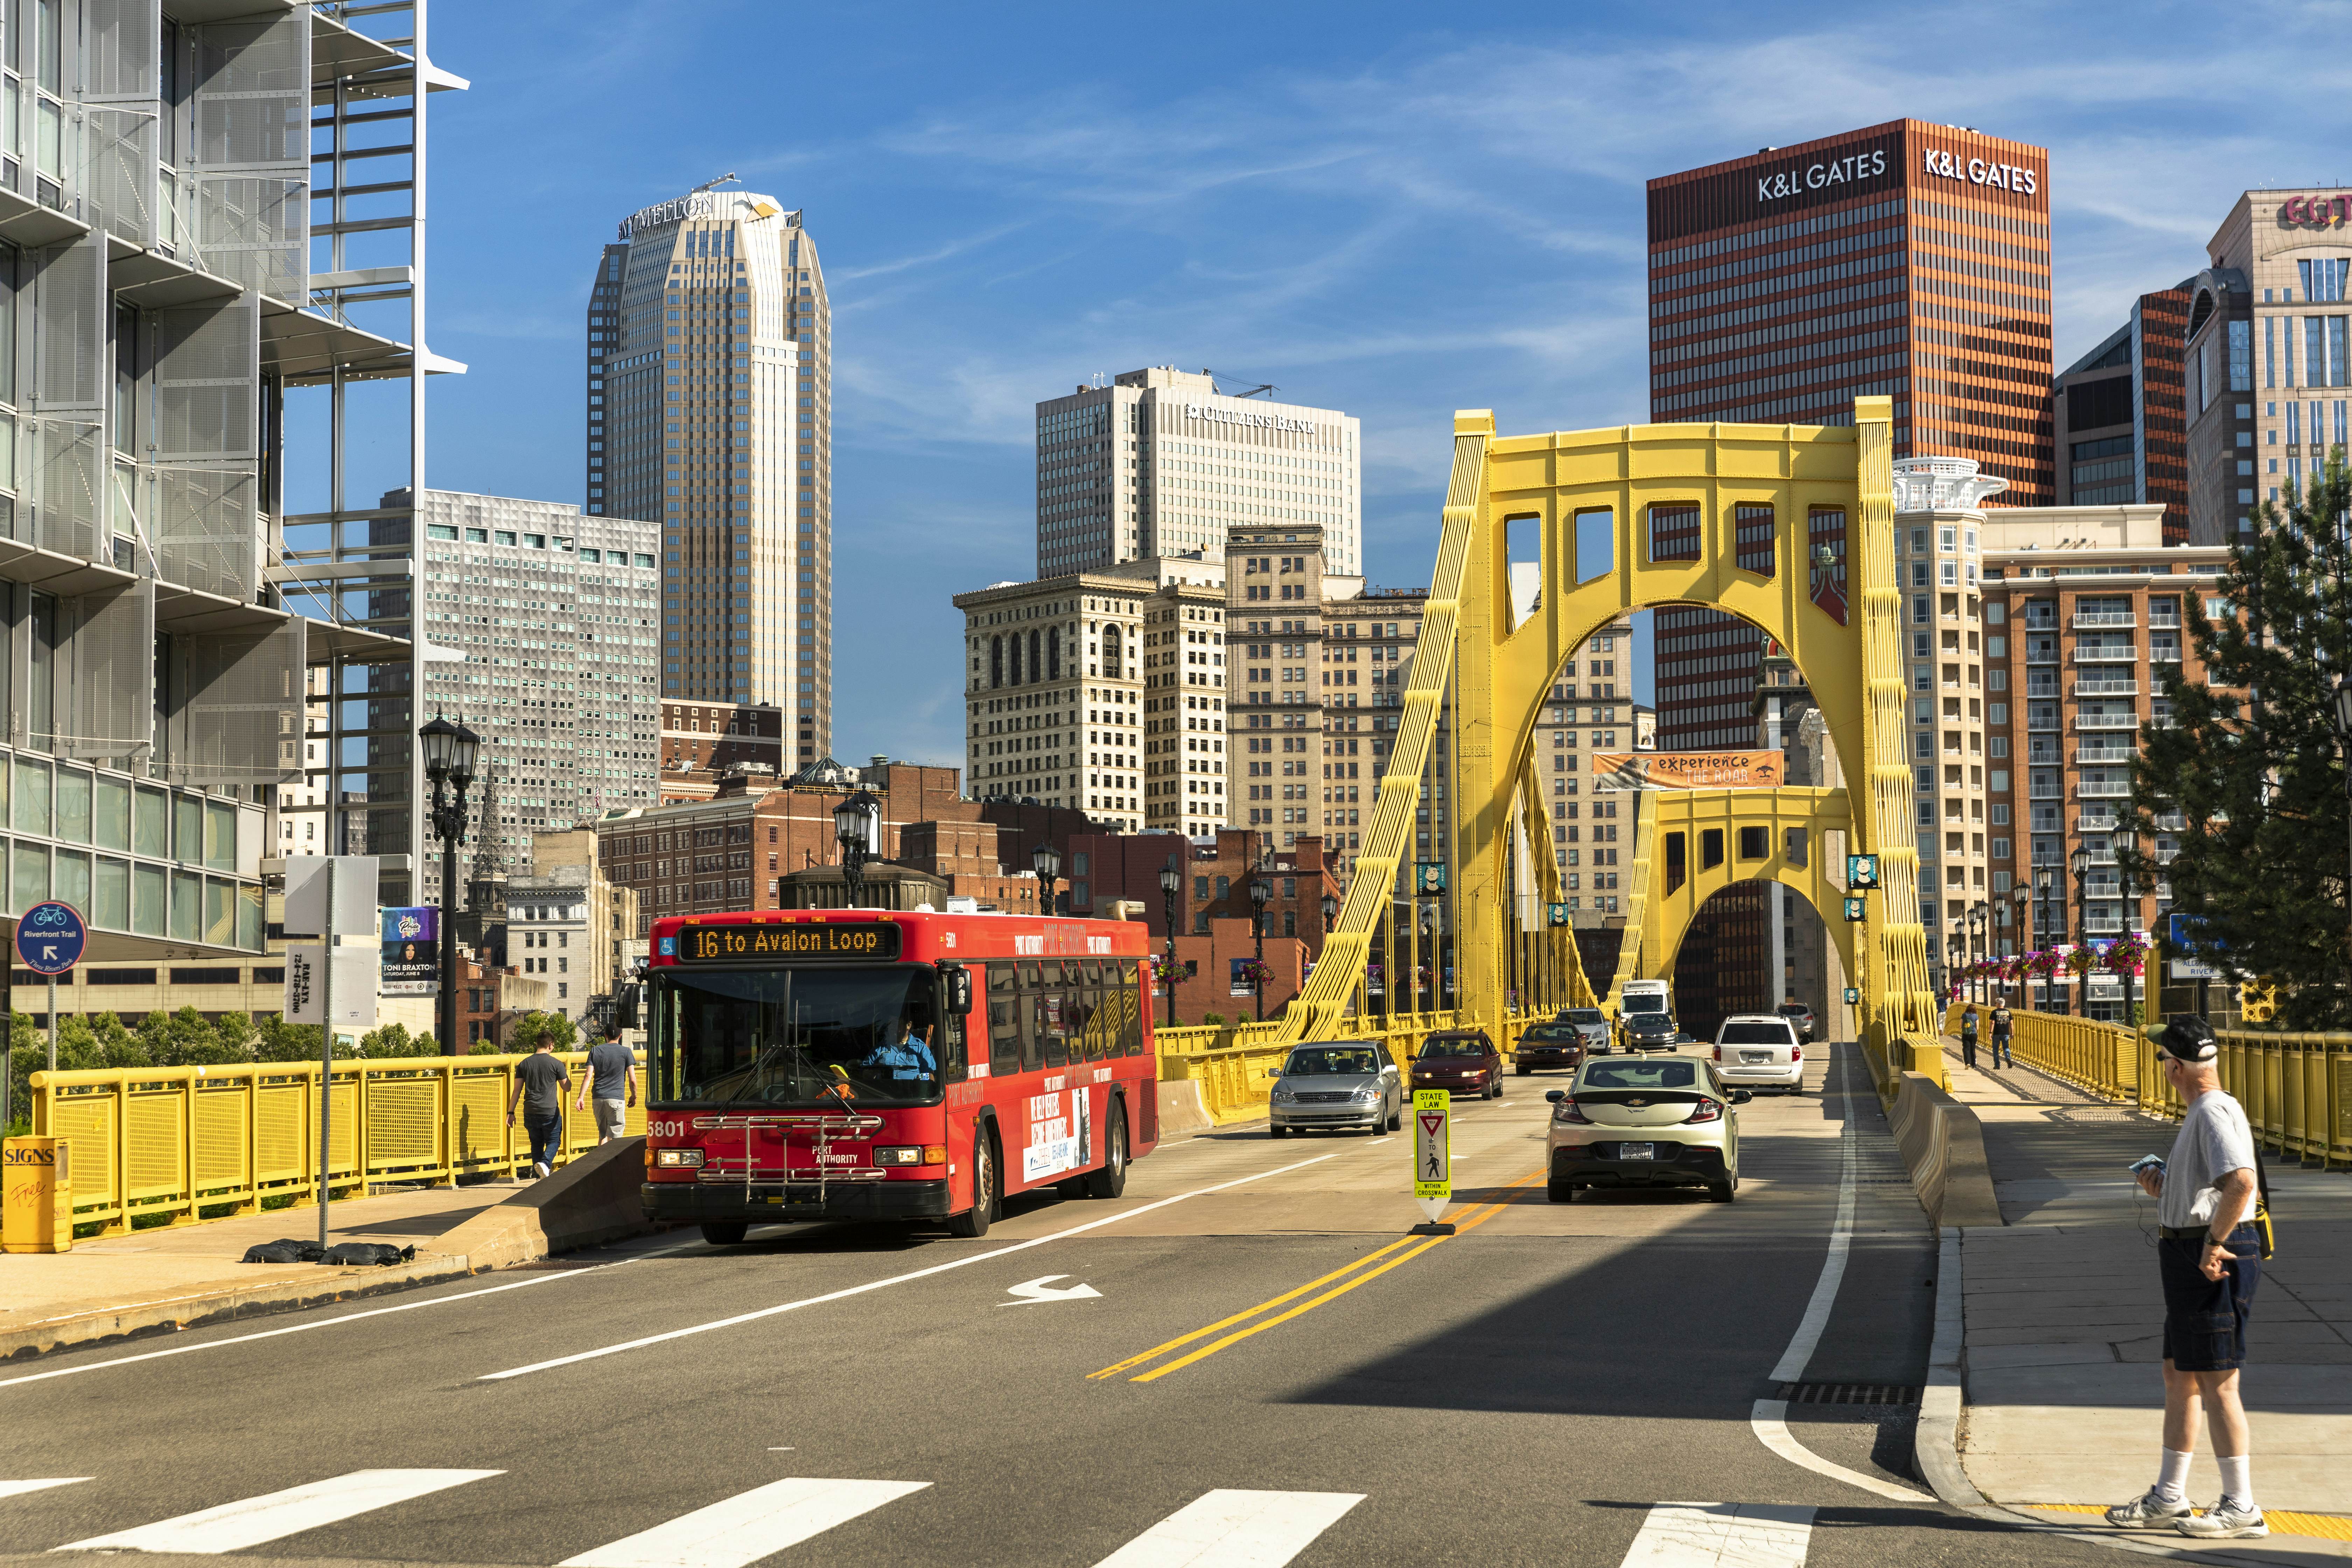 Visit Pittsburgh: 2023 Travel Guide for Pittsburgh, Pennsylvania